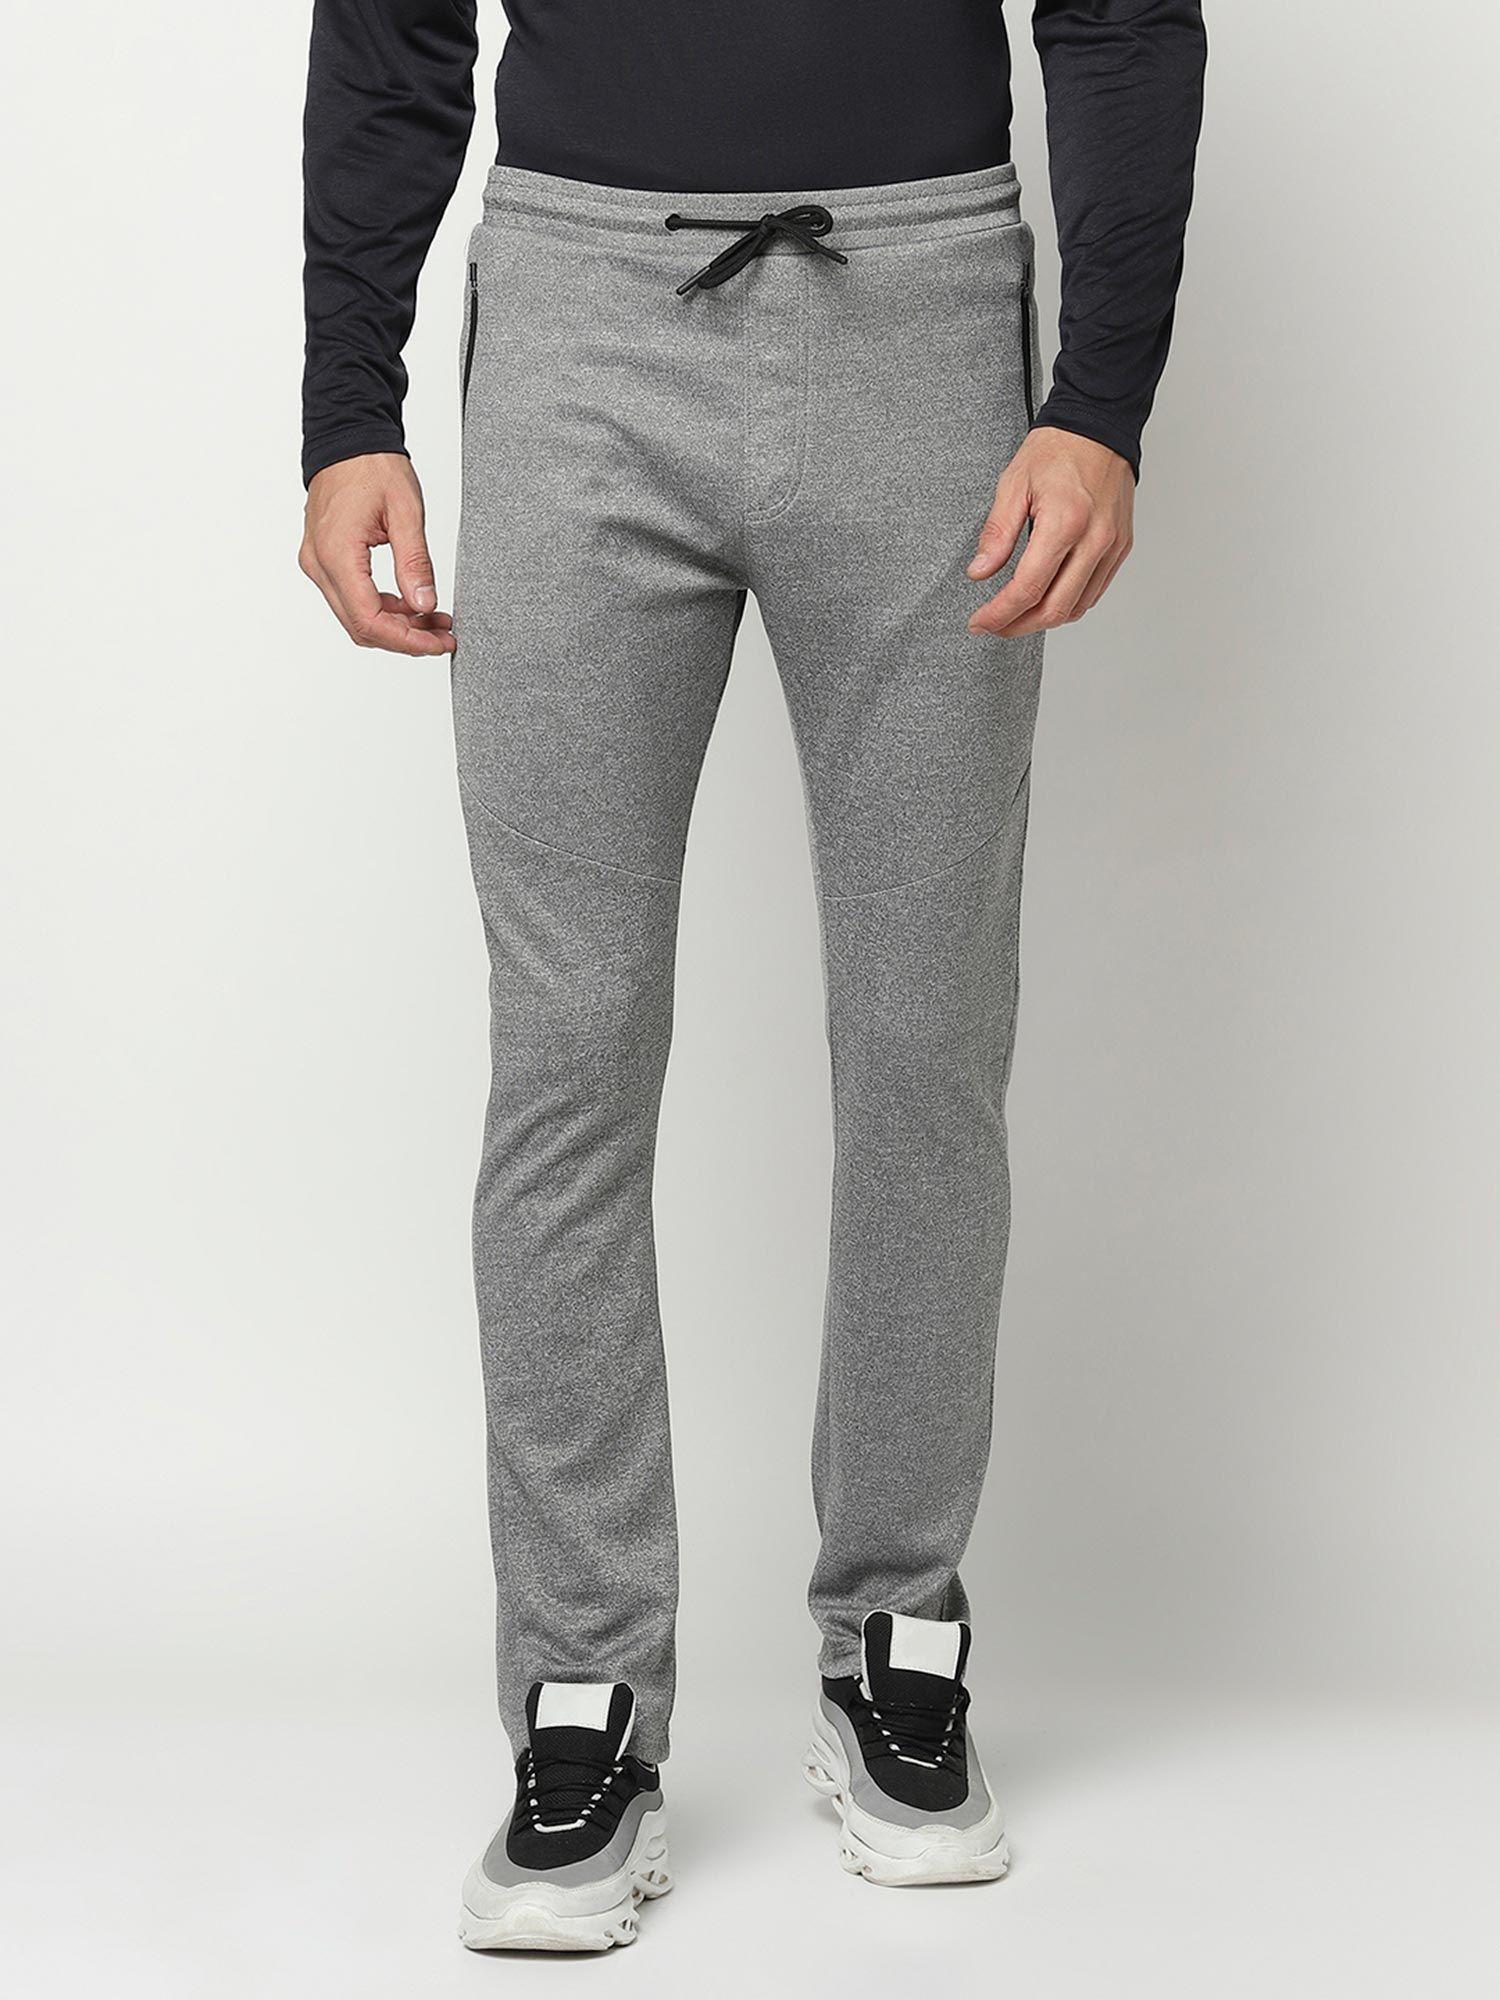 men-grey-track-pants